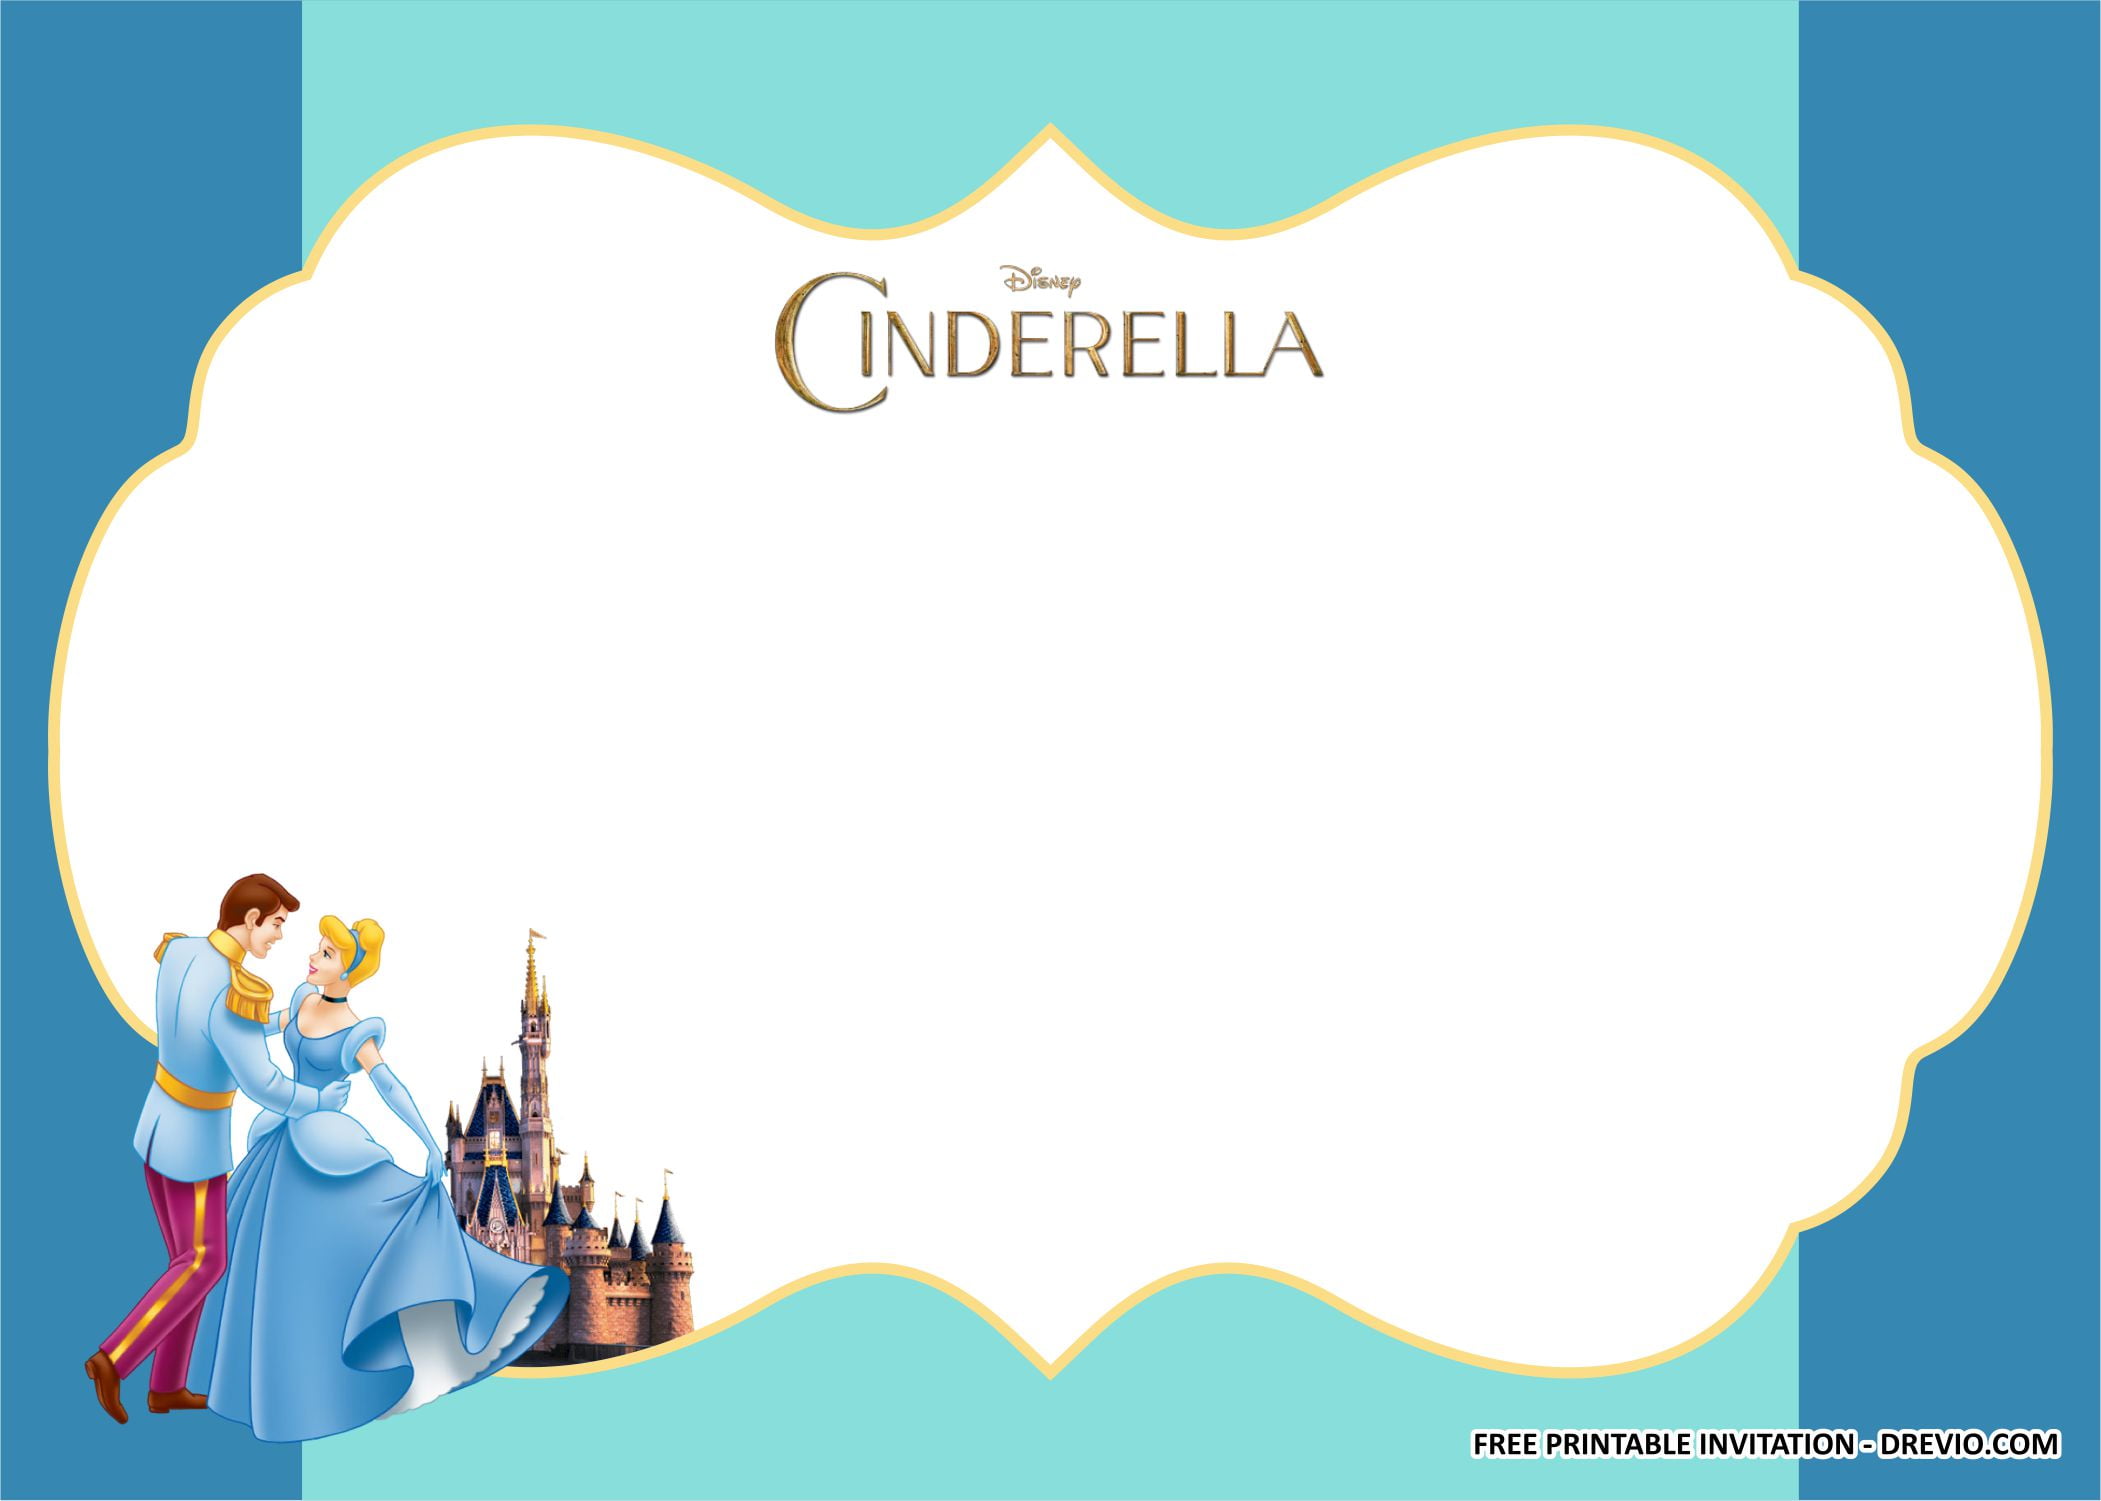 Cinderella Invitation Templates_1 Download Hundreds FREE PRINTABLE